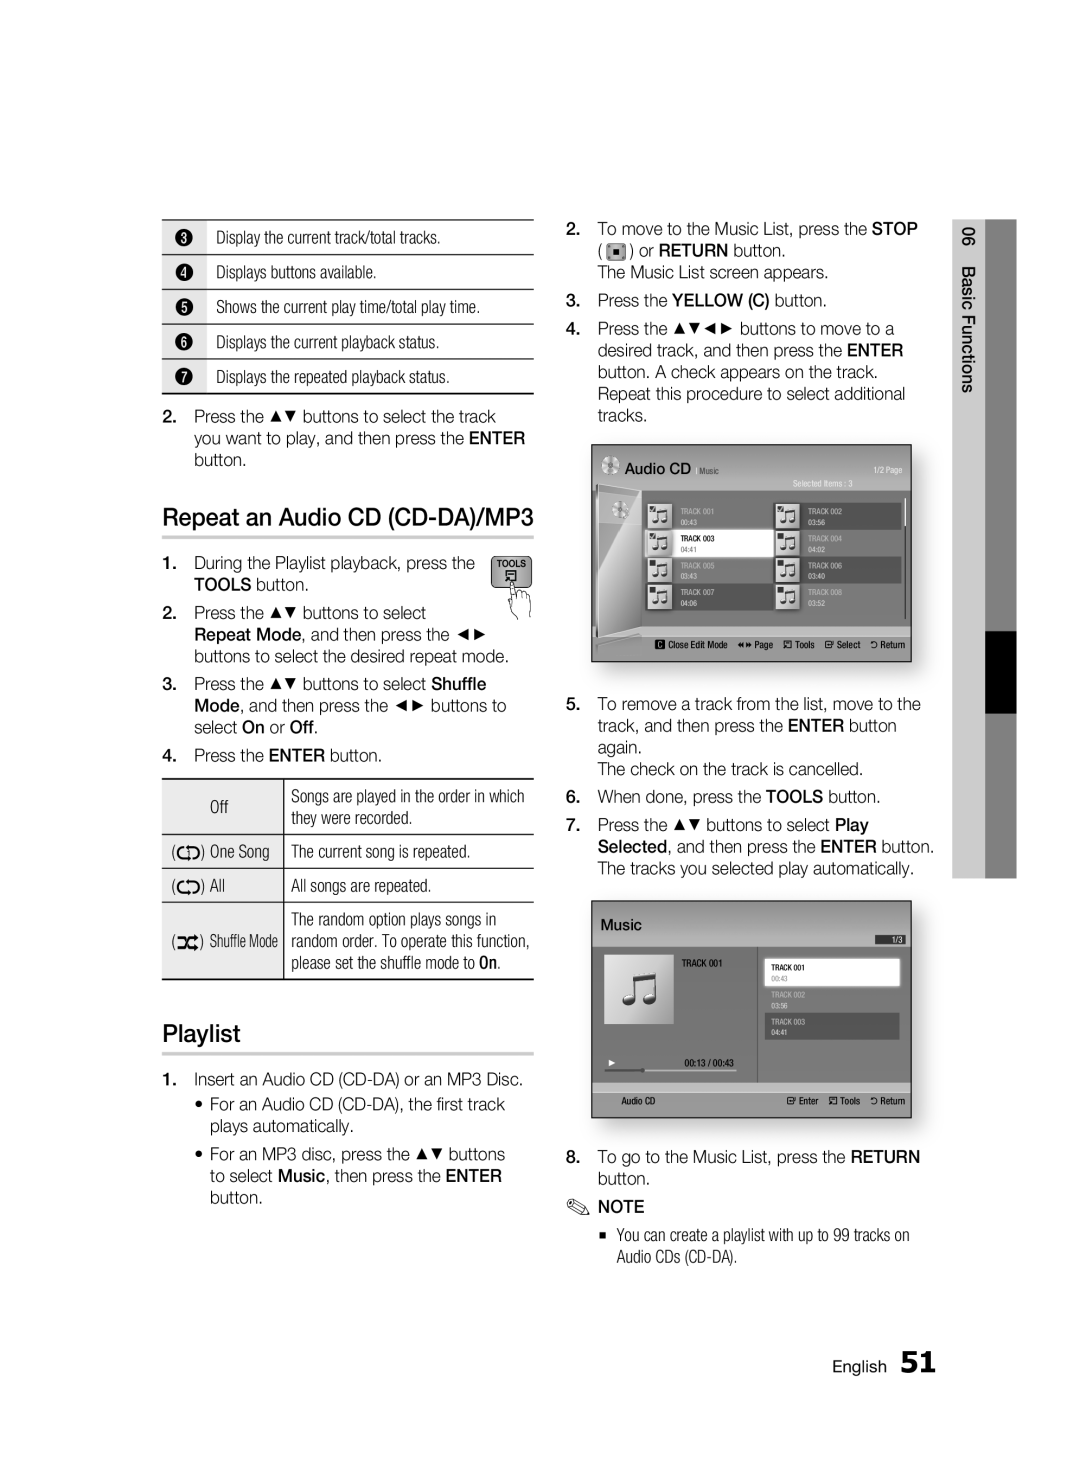 Samsung BD-D6500 user manual Repeat an Audio CD CD-DA/MP3, Playlist, Audio CD Music 